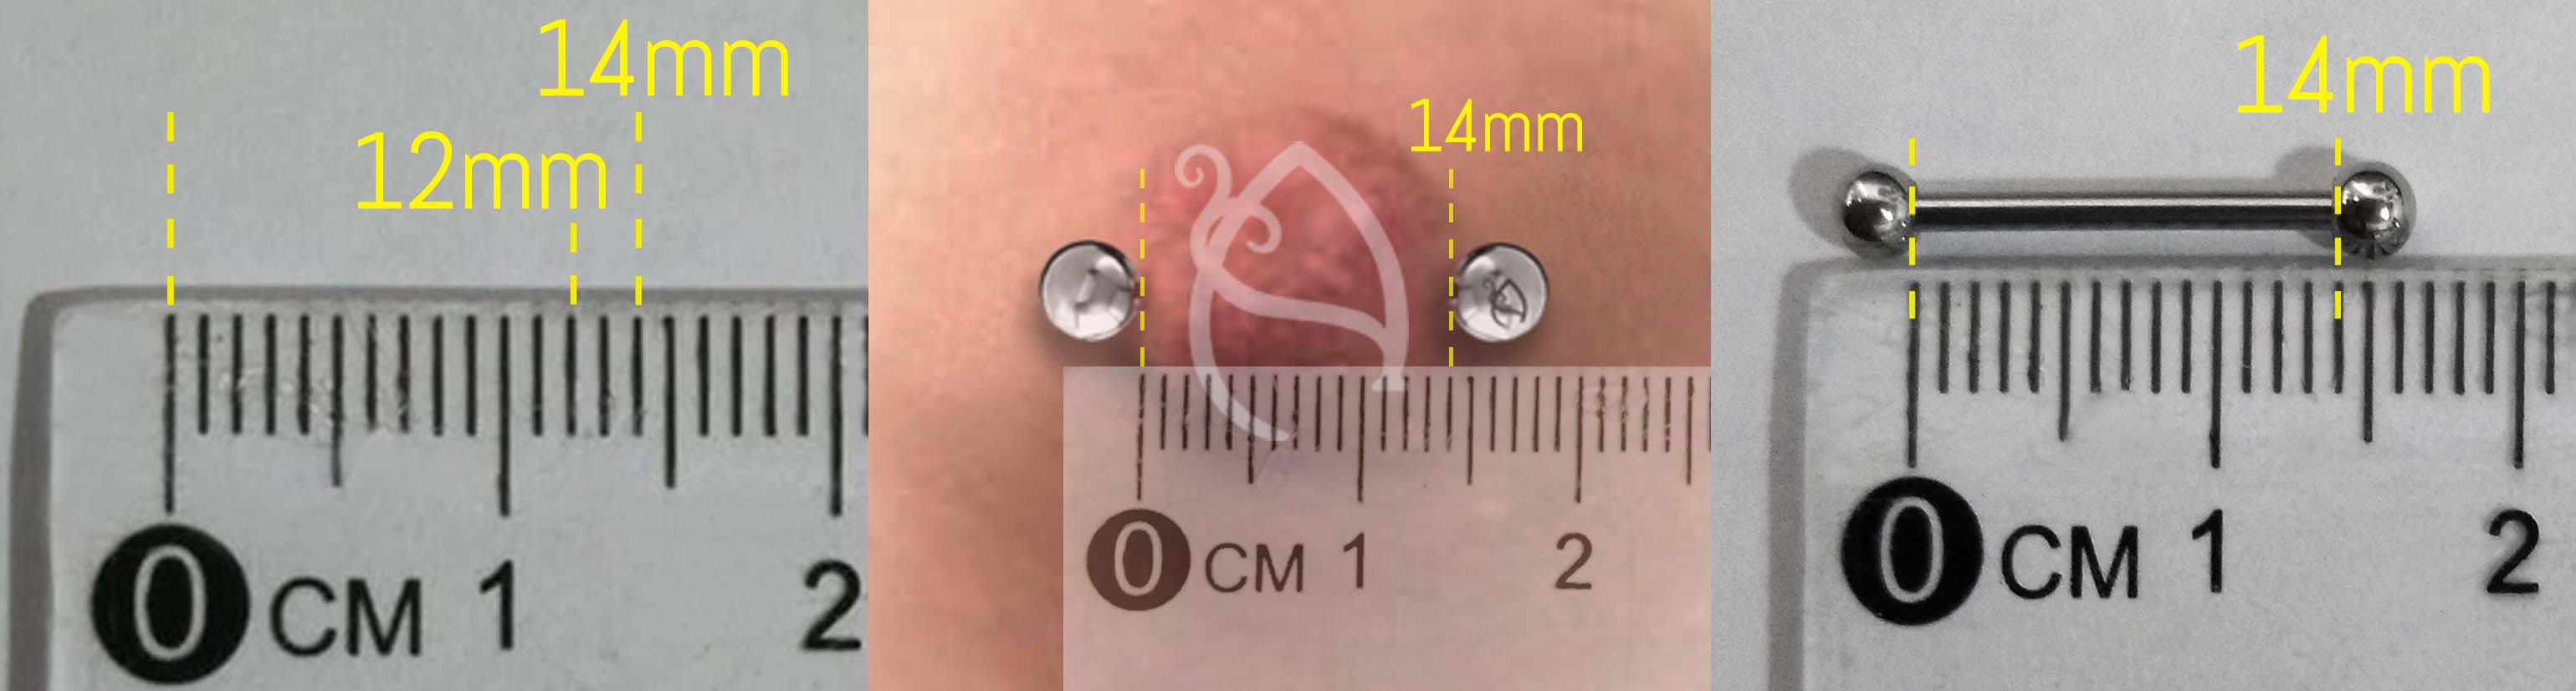 como-medir-piercing-1.jpg